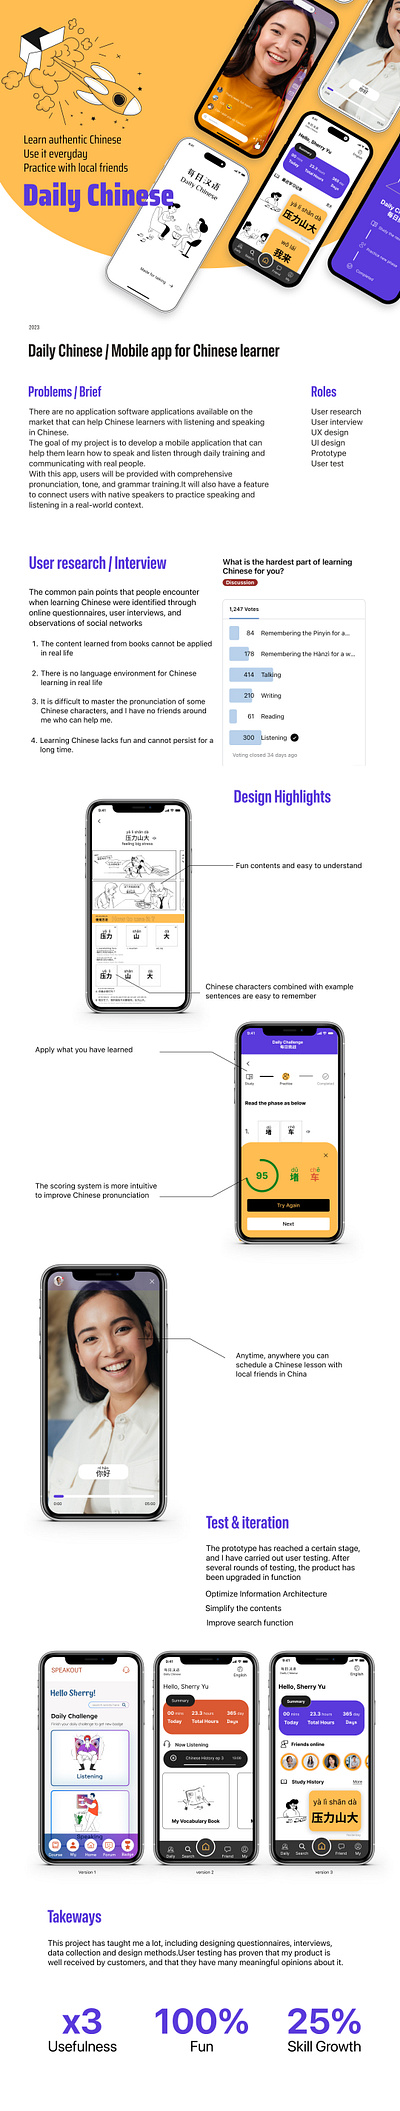 Mobile App Design : Daily Chinese language app mobile app ui ux